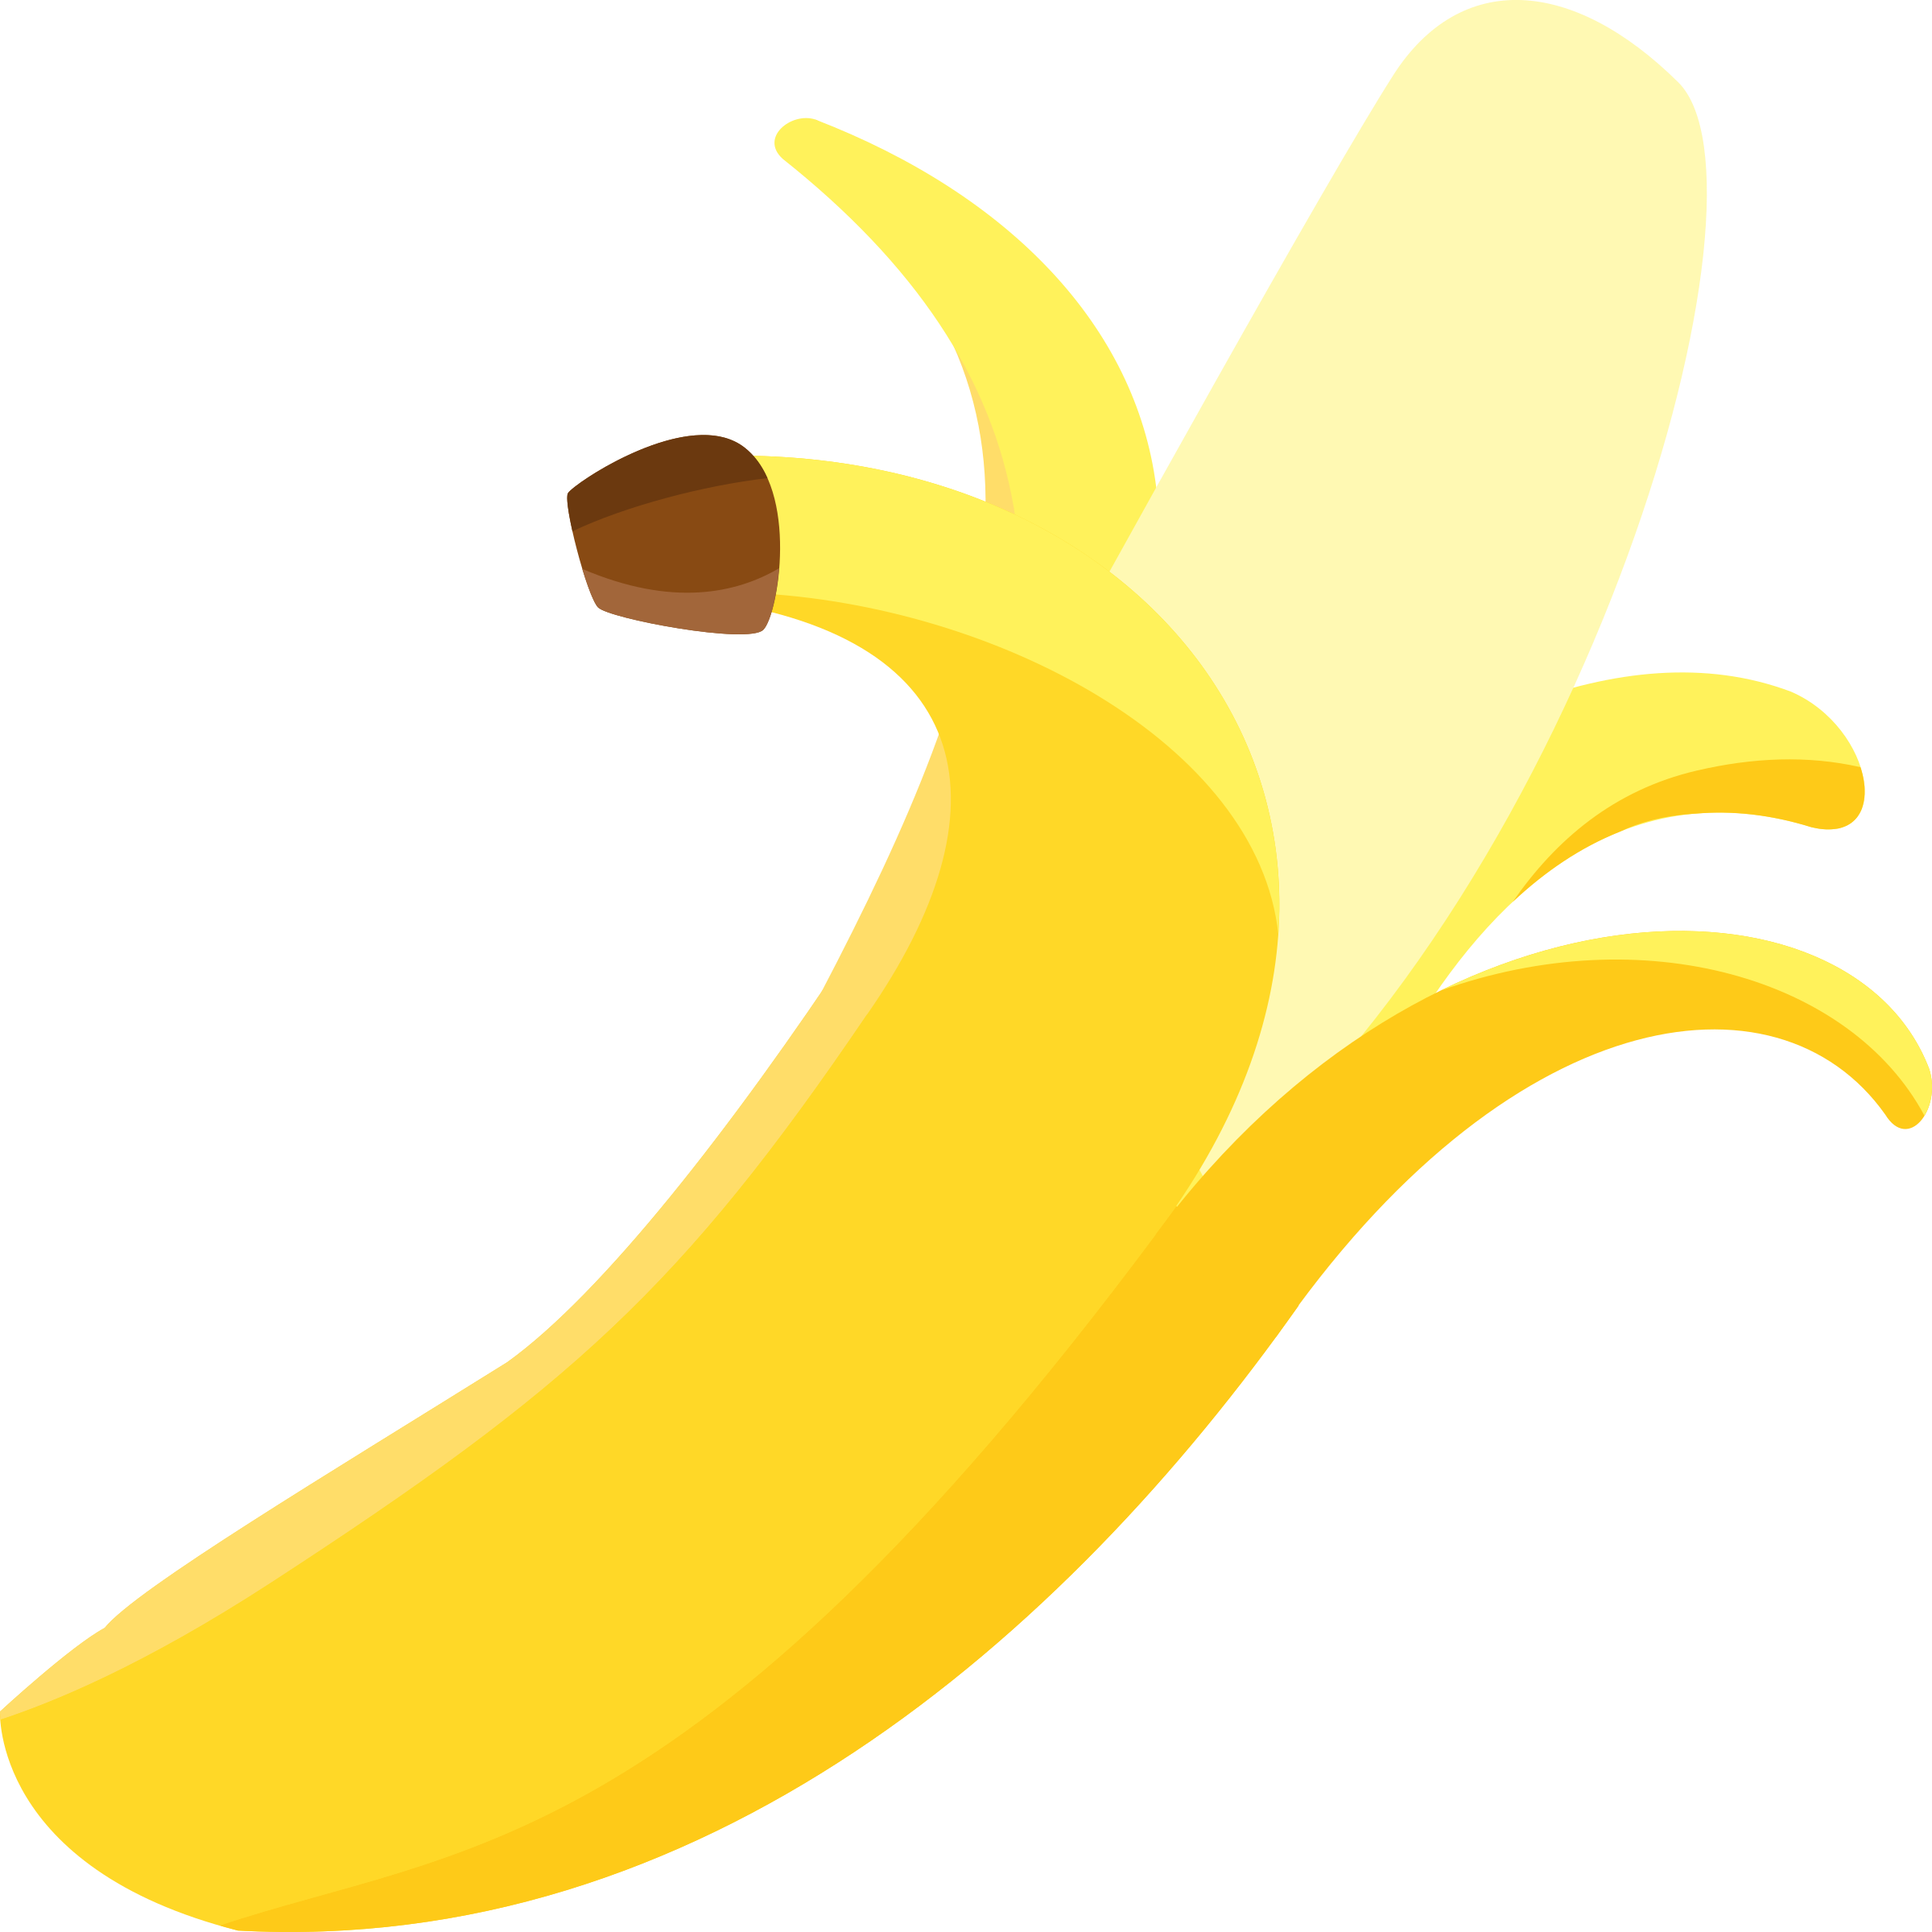 Fruits Clipart Peeled Banana 102b Clipart Classroom Clipart | Images ...